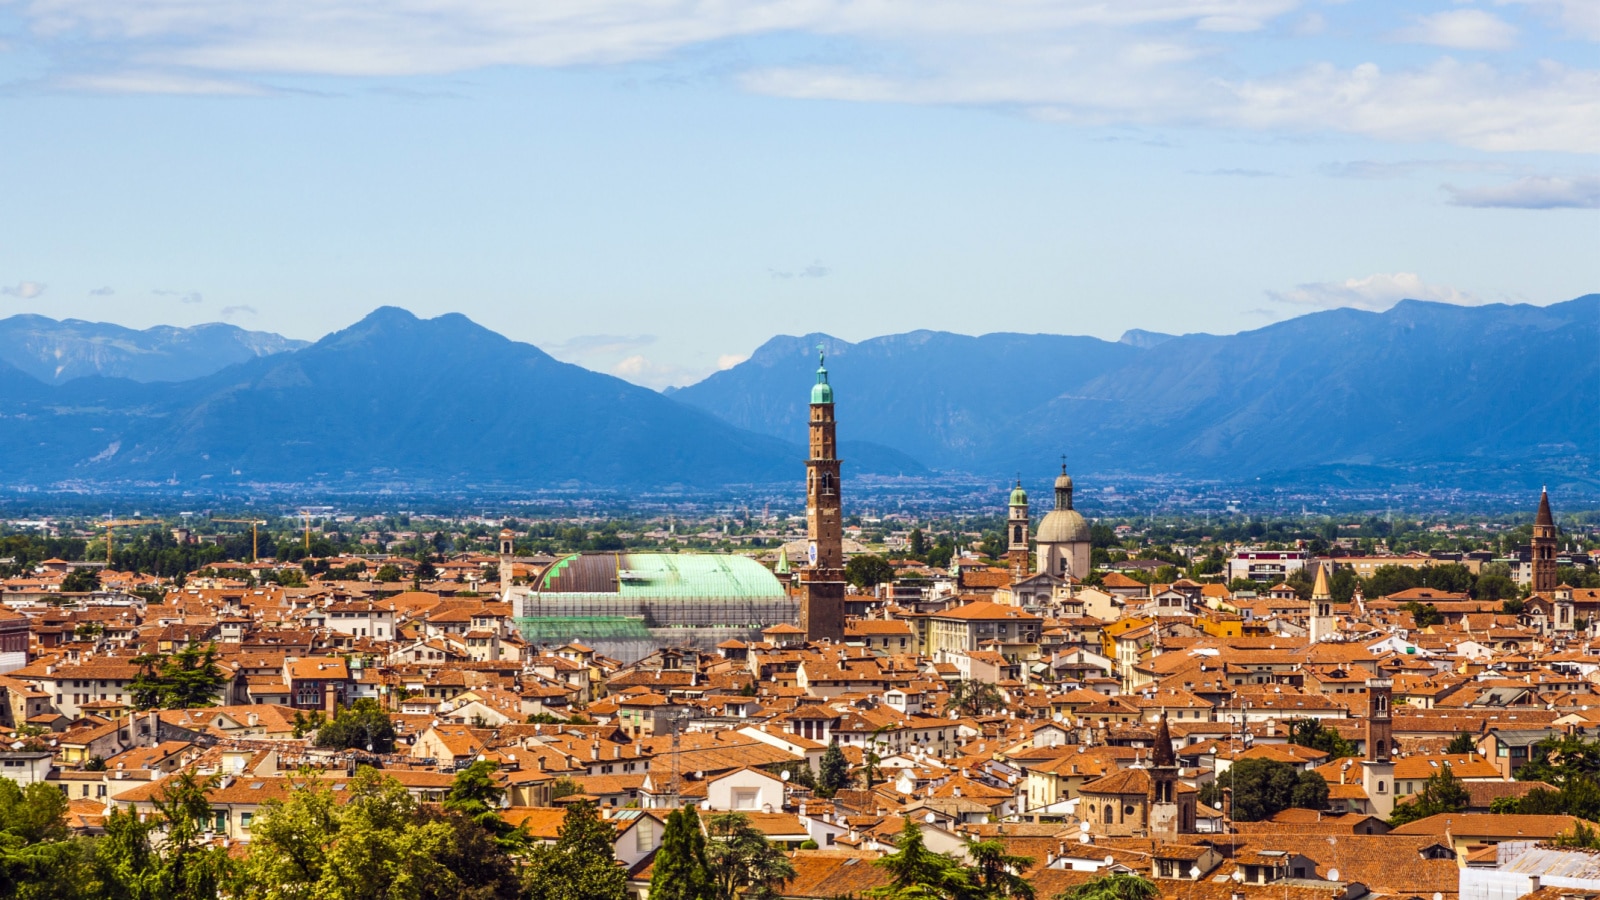 Vicenza, Italy, city of architect Palladio